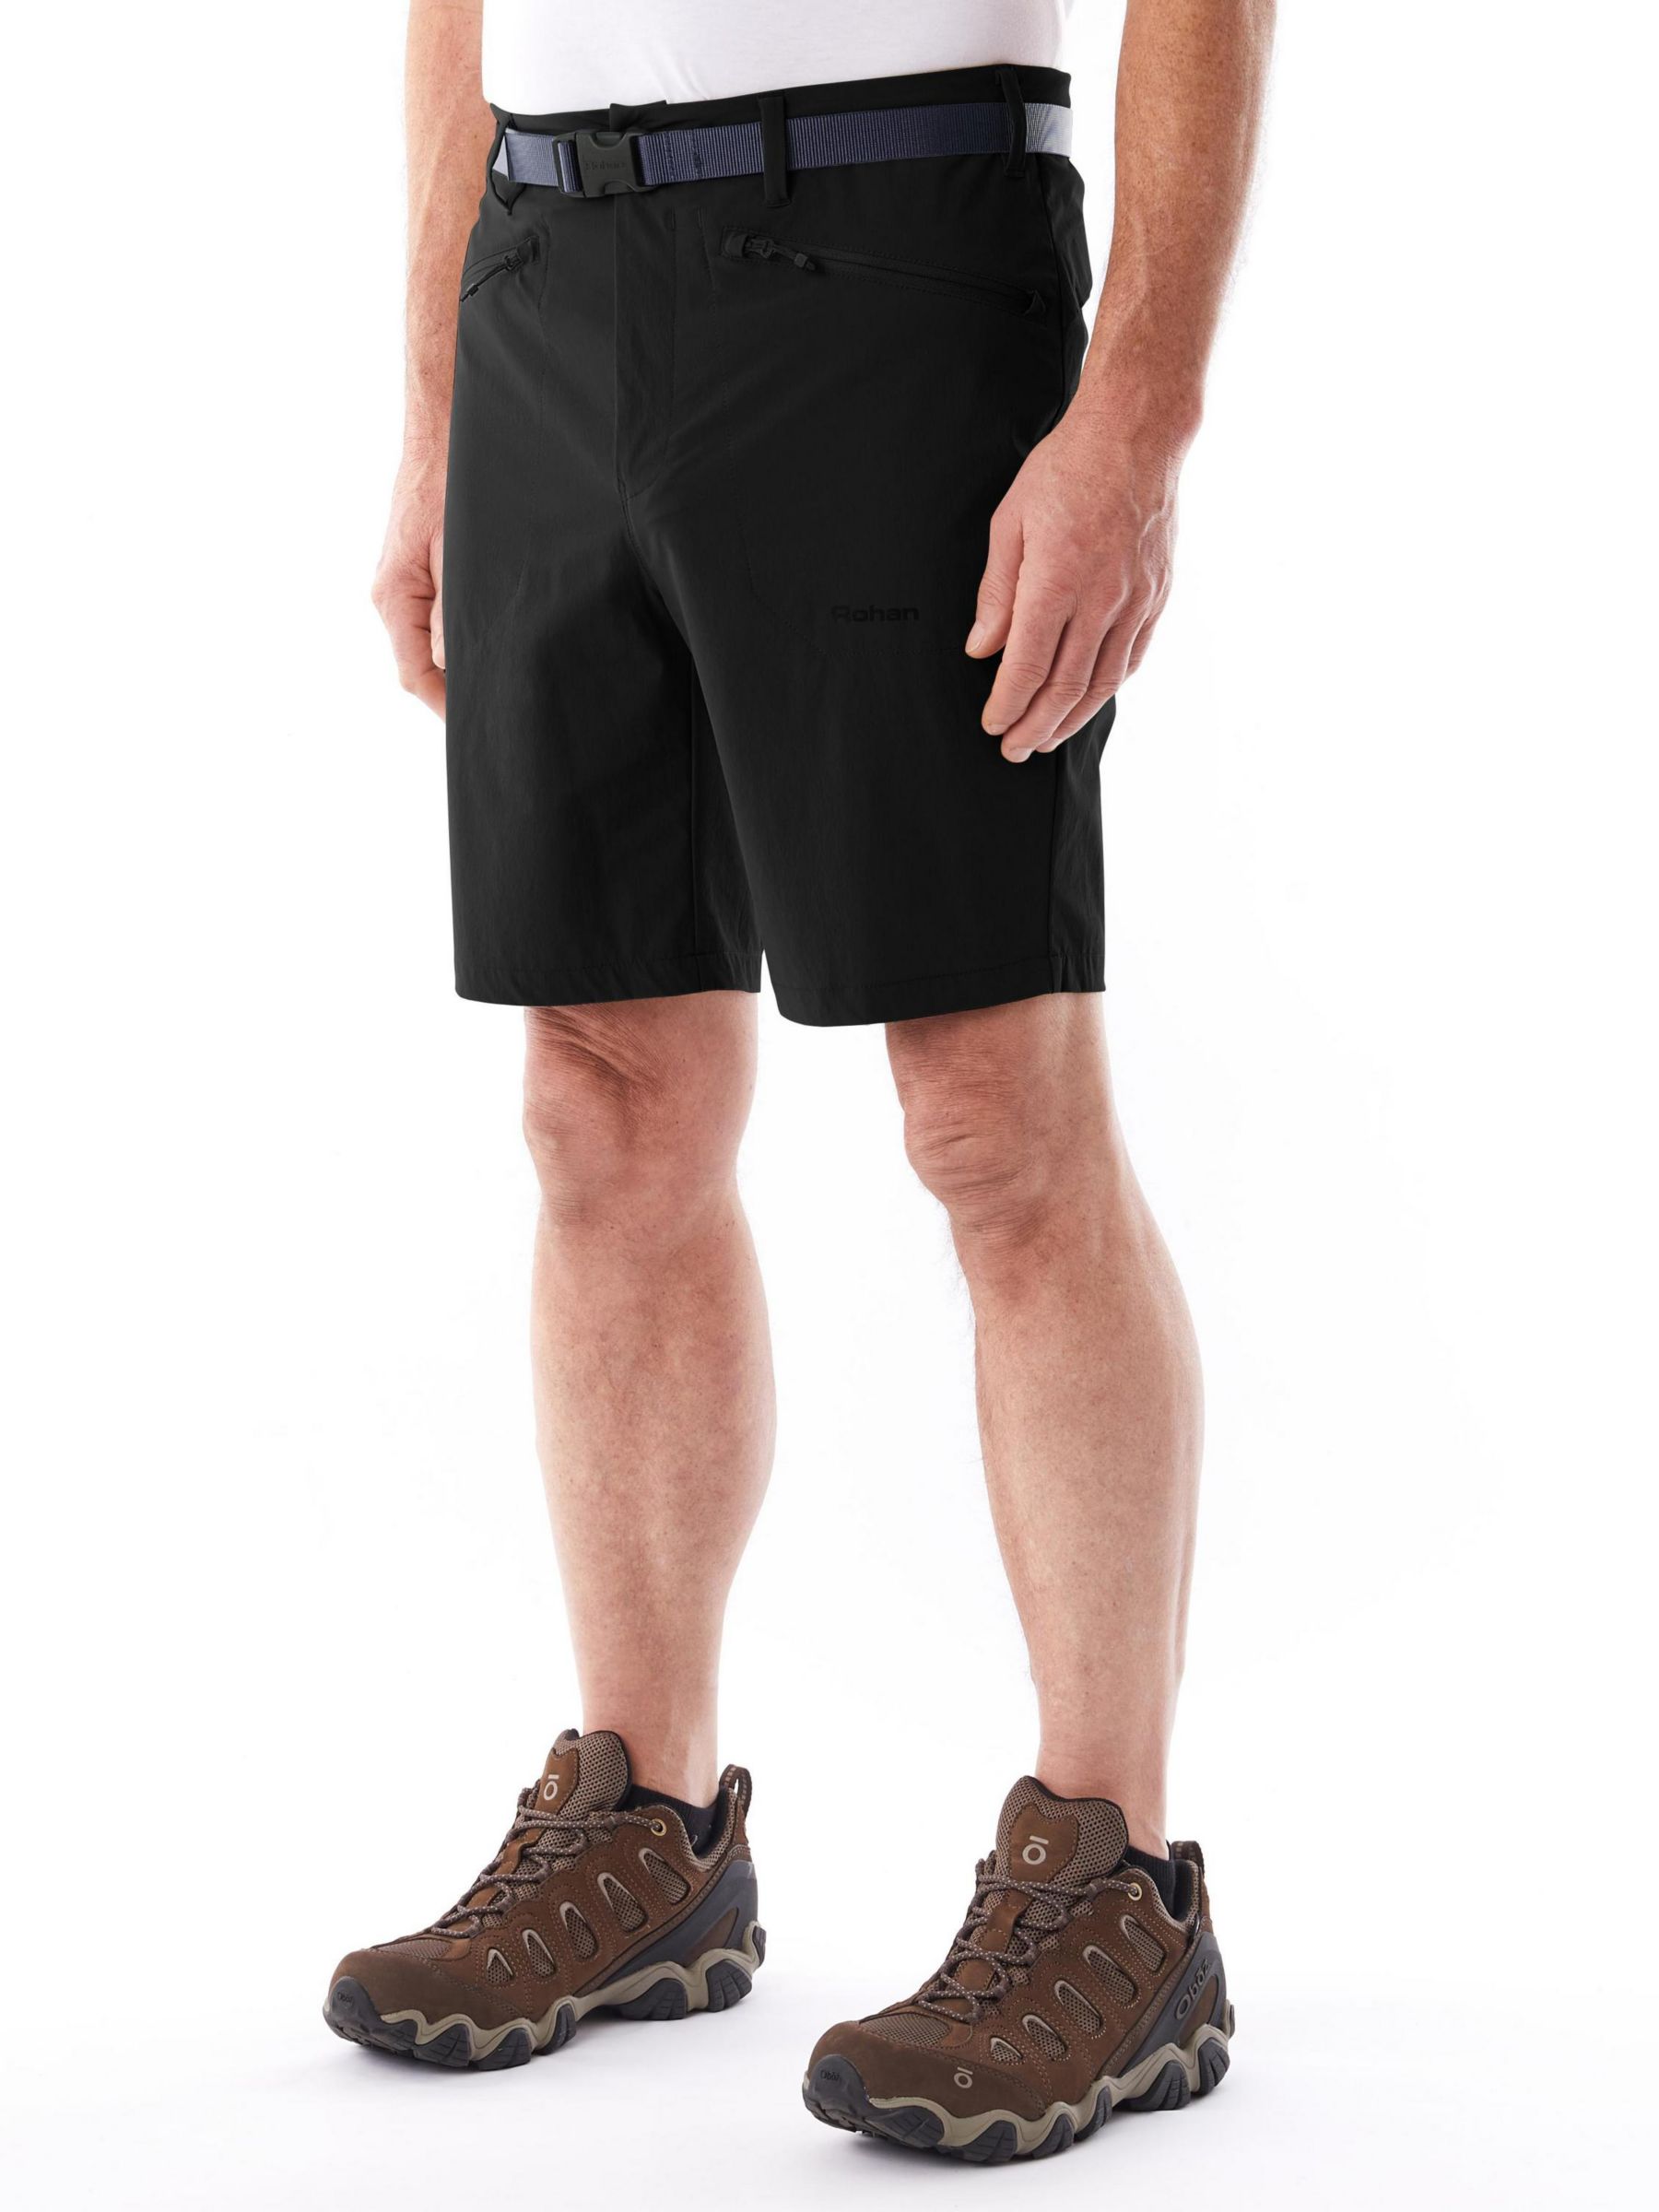 Rohan Vista Lightweight Walking Shorts, Black, 30R